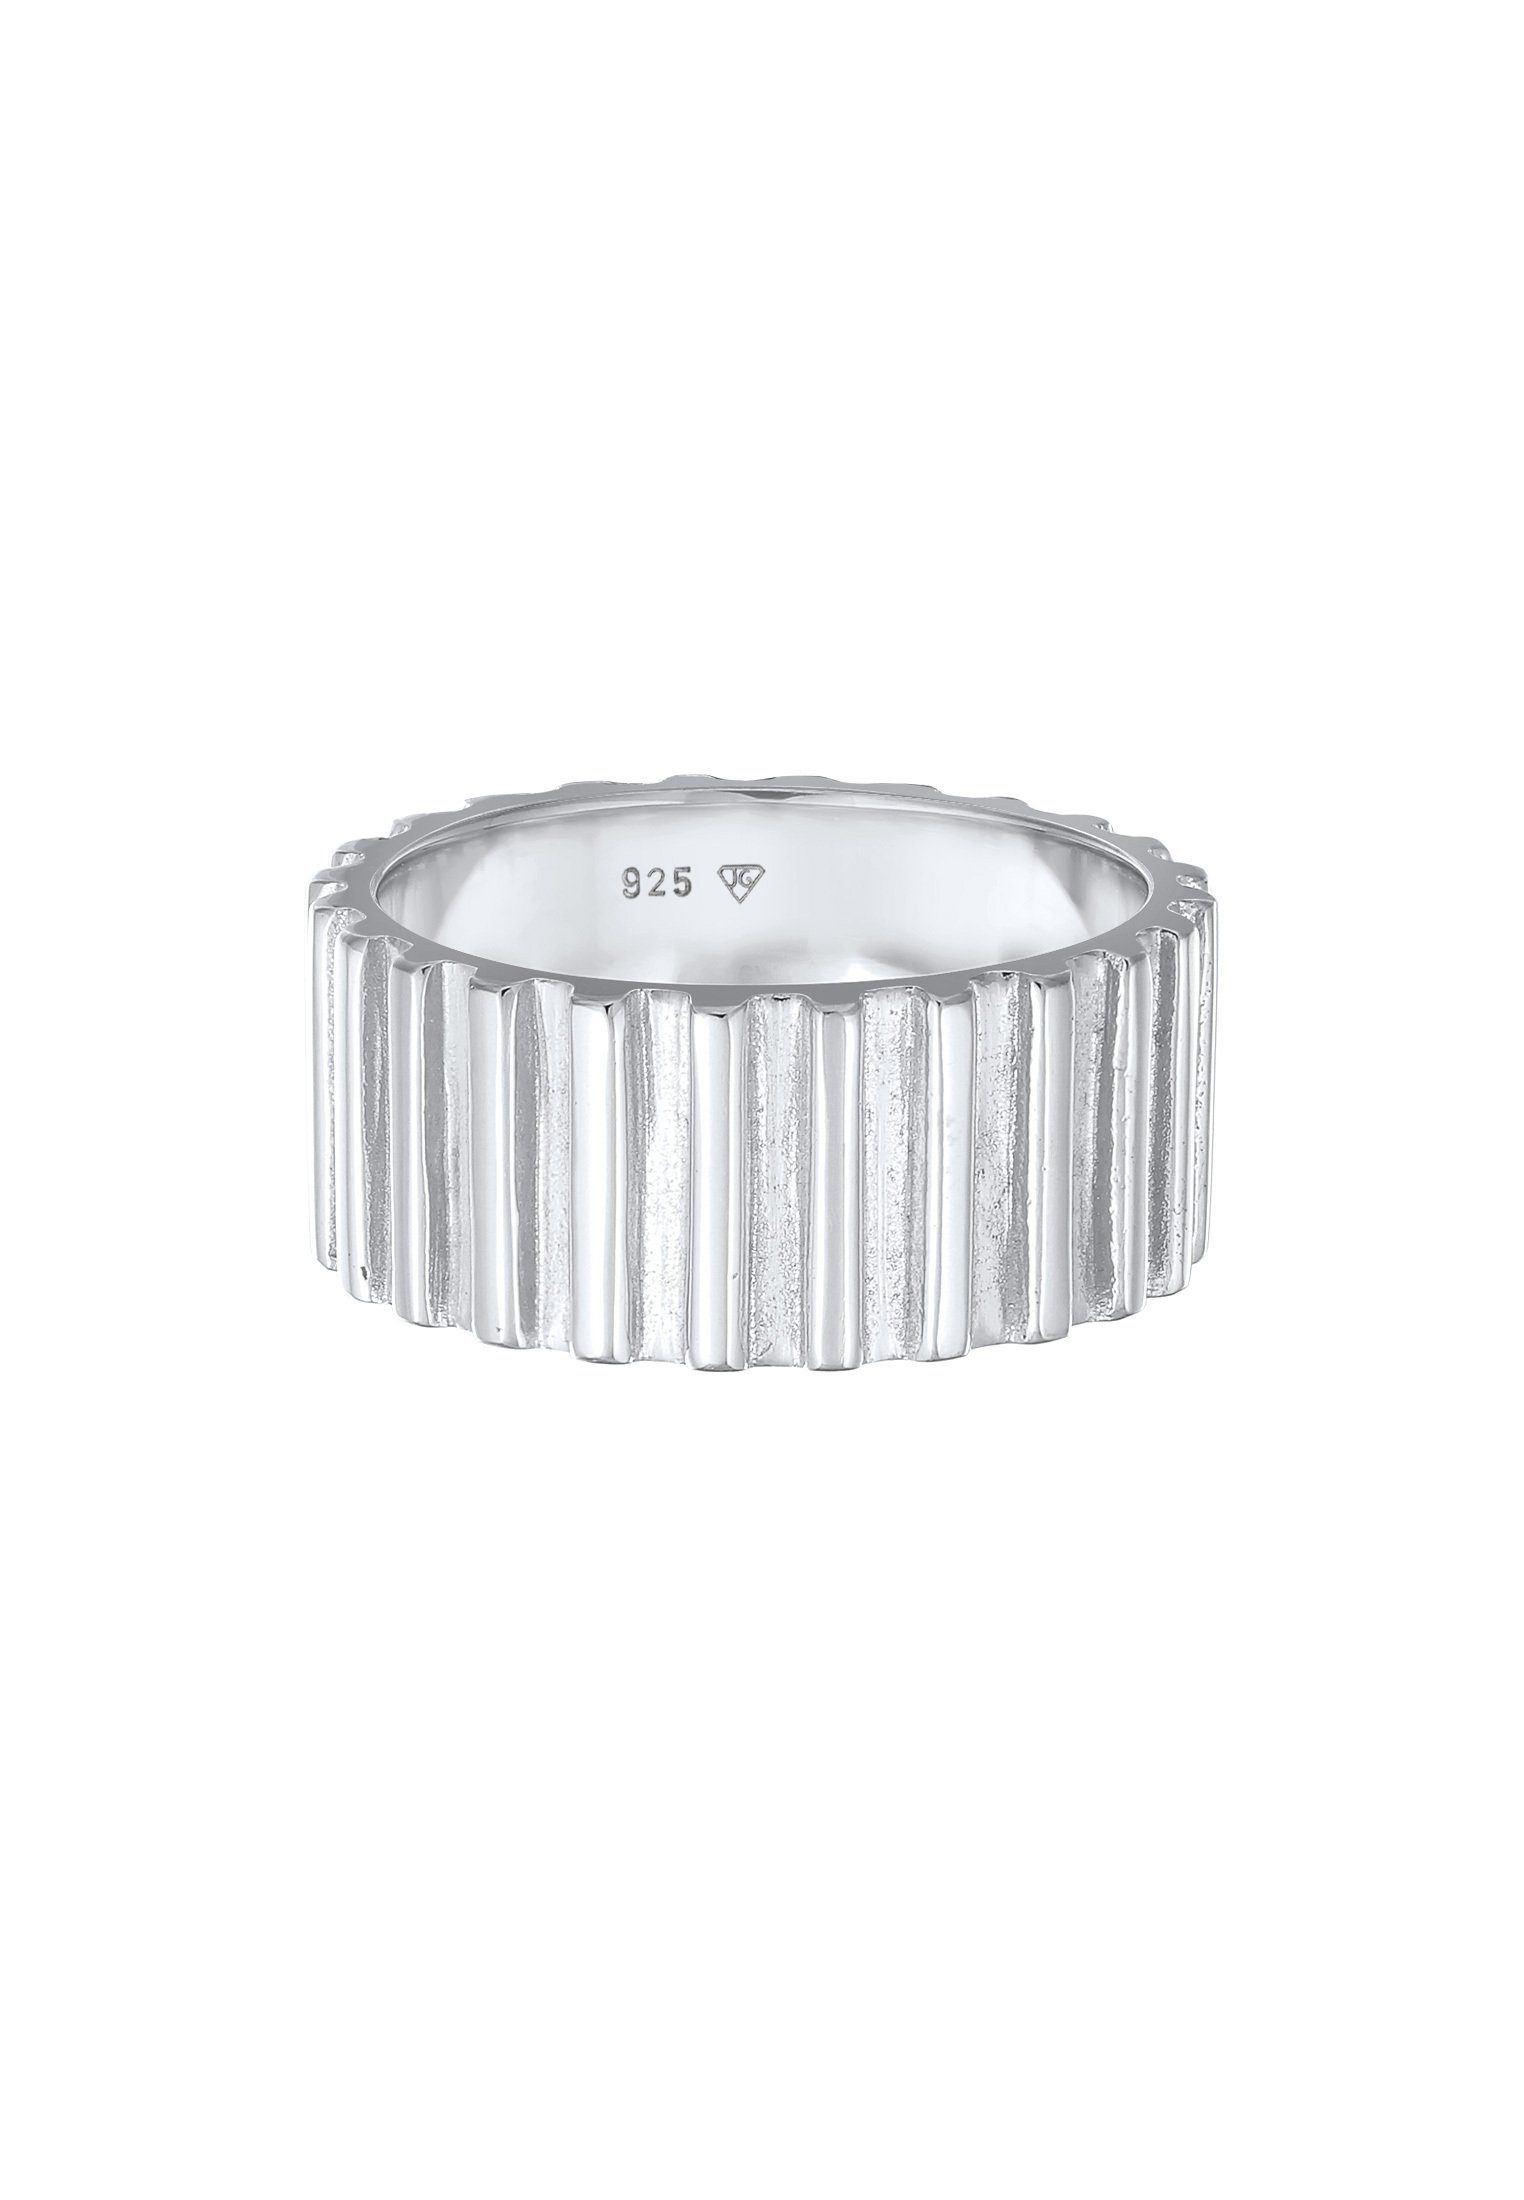 Damen Schmuck Elli Premium Fingerring Bandring Relief Rillen Trend Breit 925 Silber